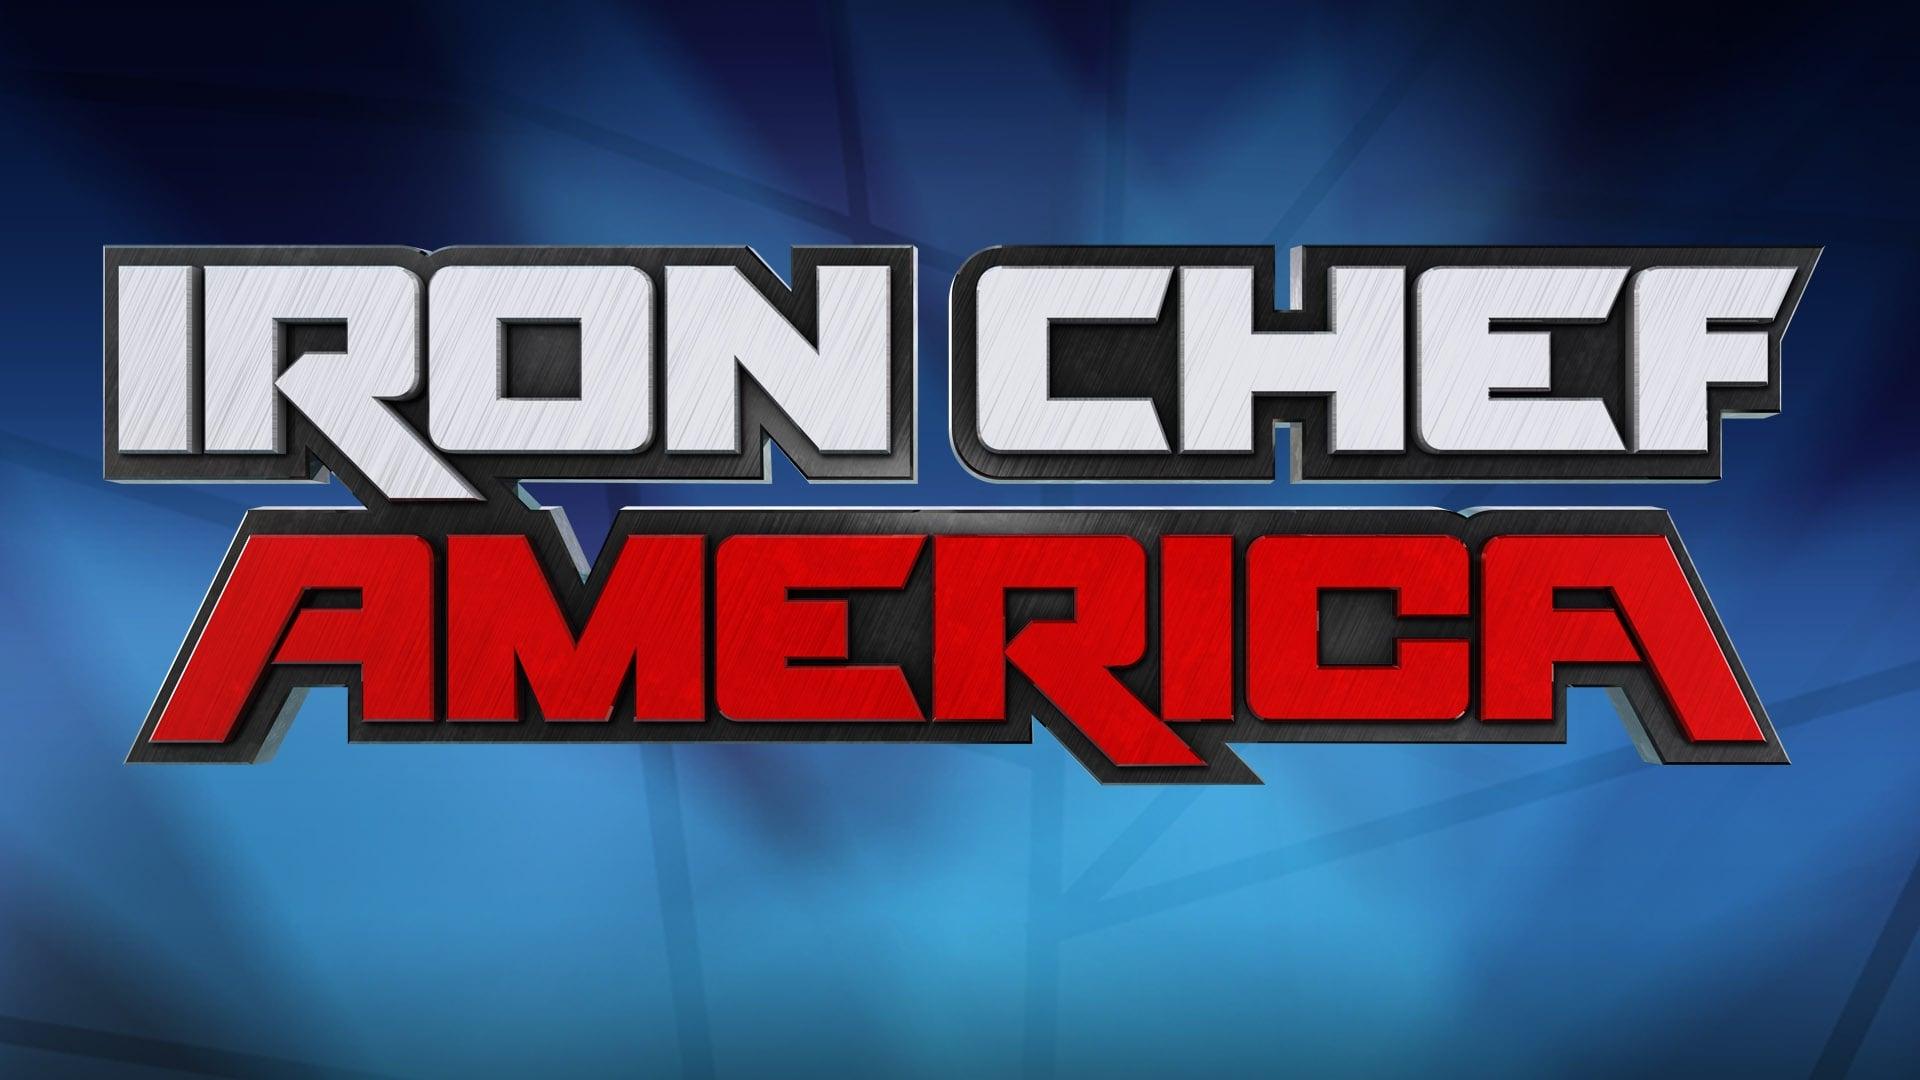 Iron Chef America backdrop